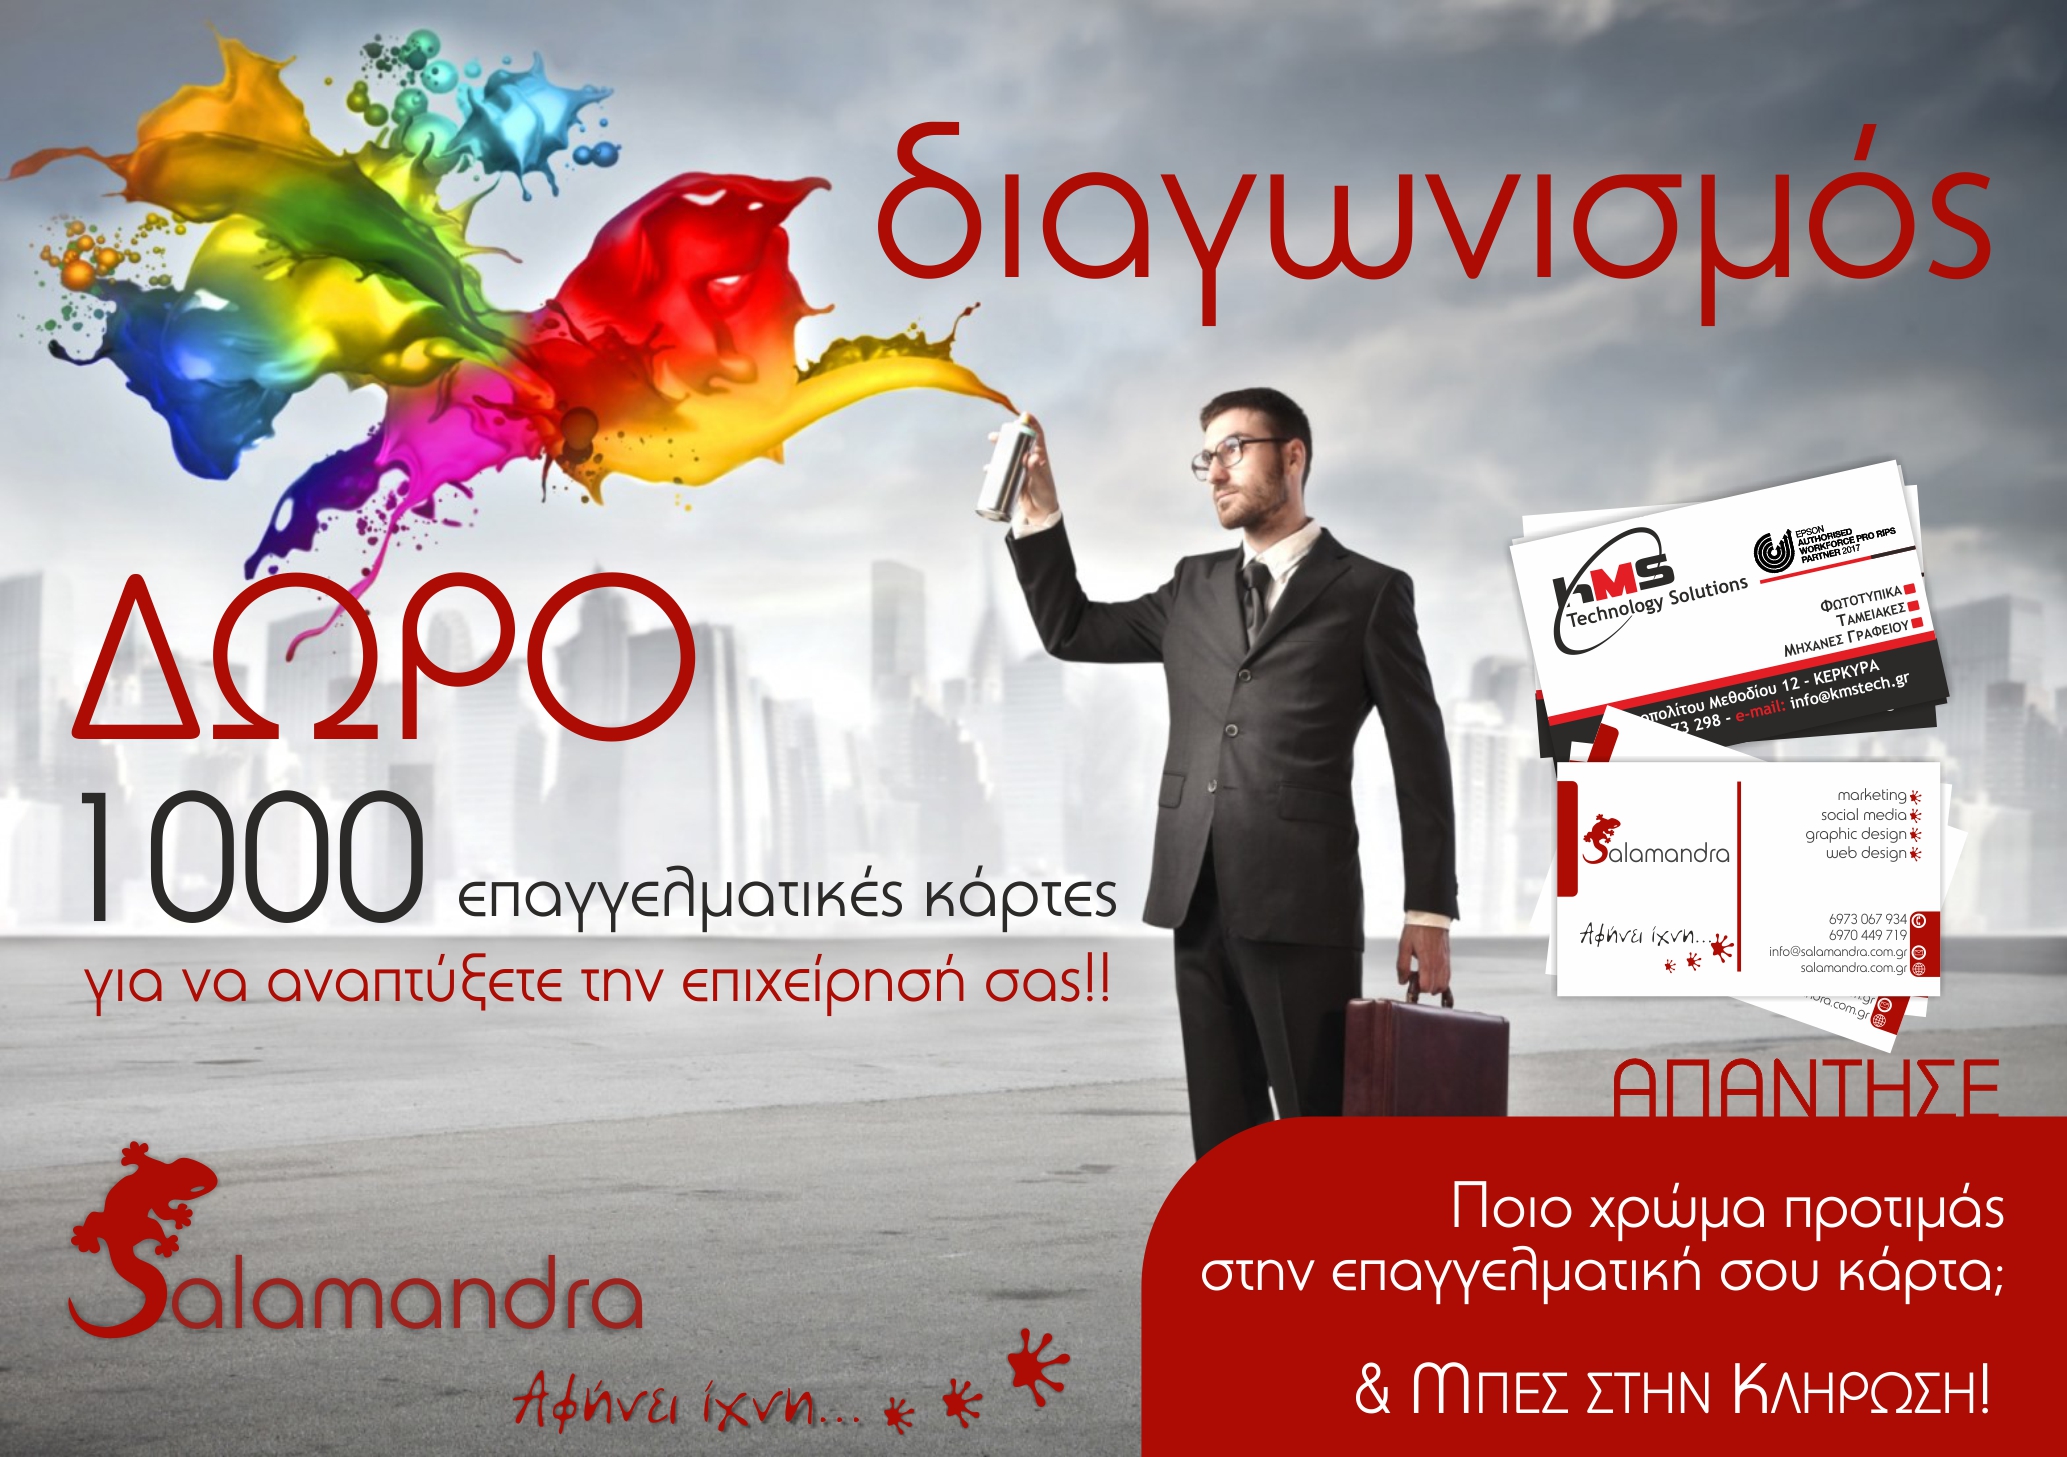 You are currently viewing Διαγωνισμός με Δώρο «1000 επαγγελματικές κάρτες»